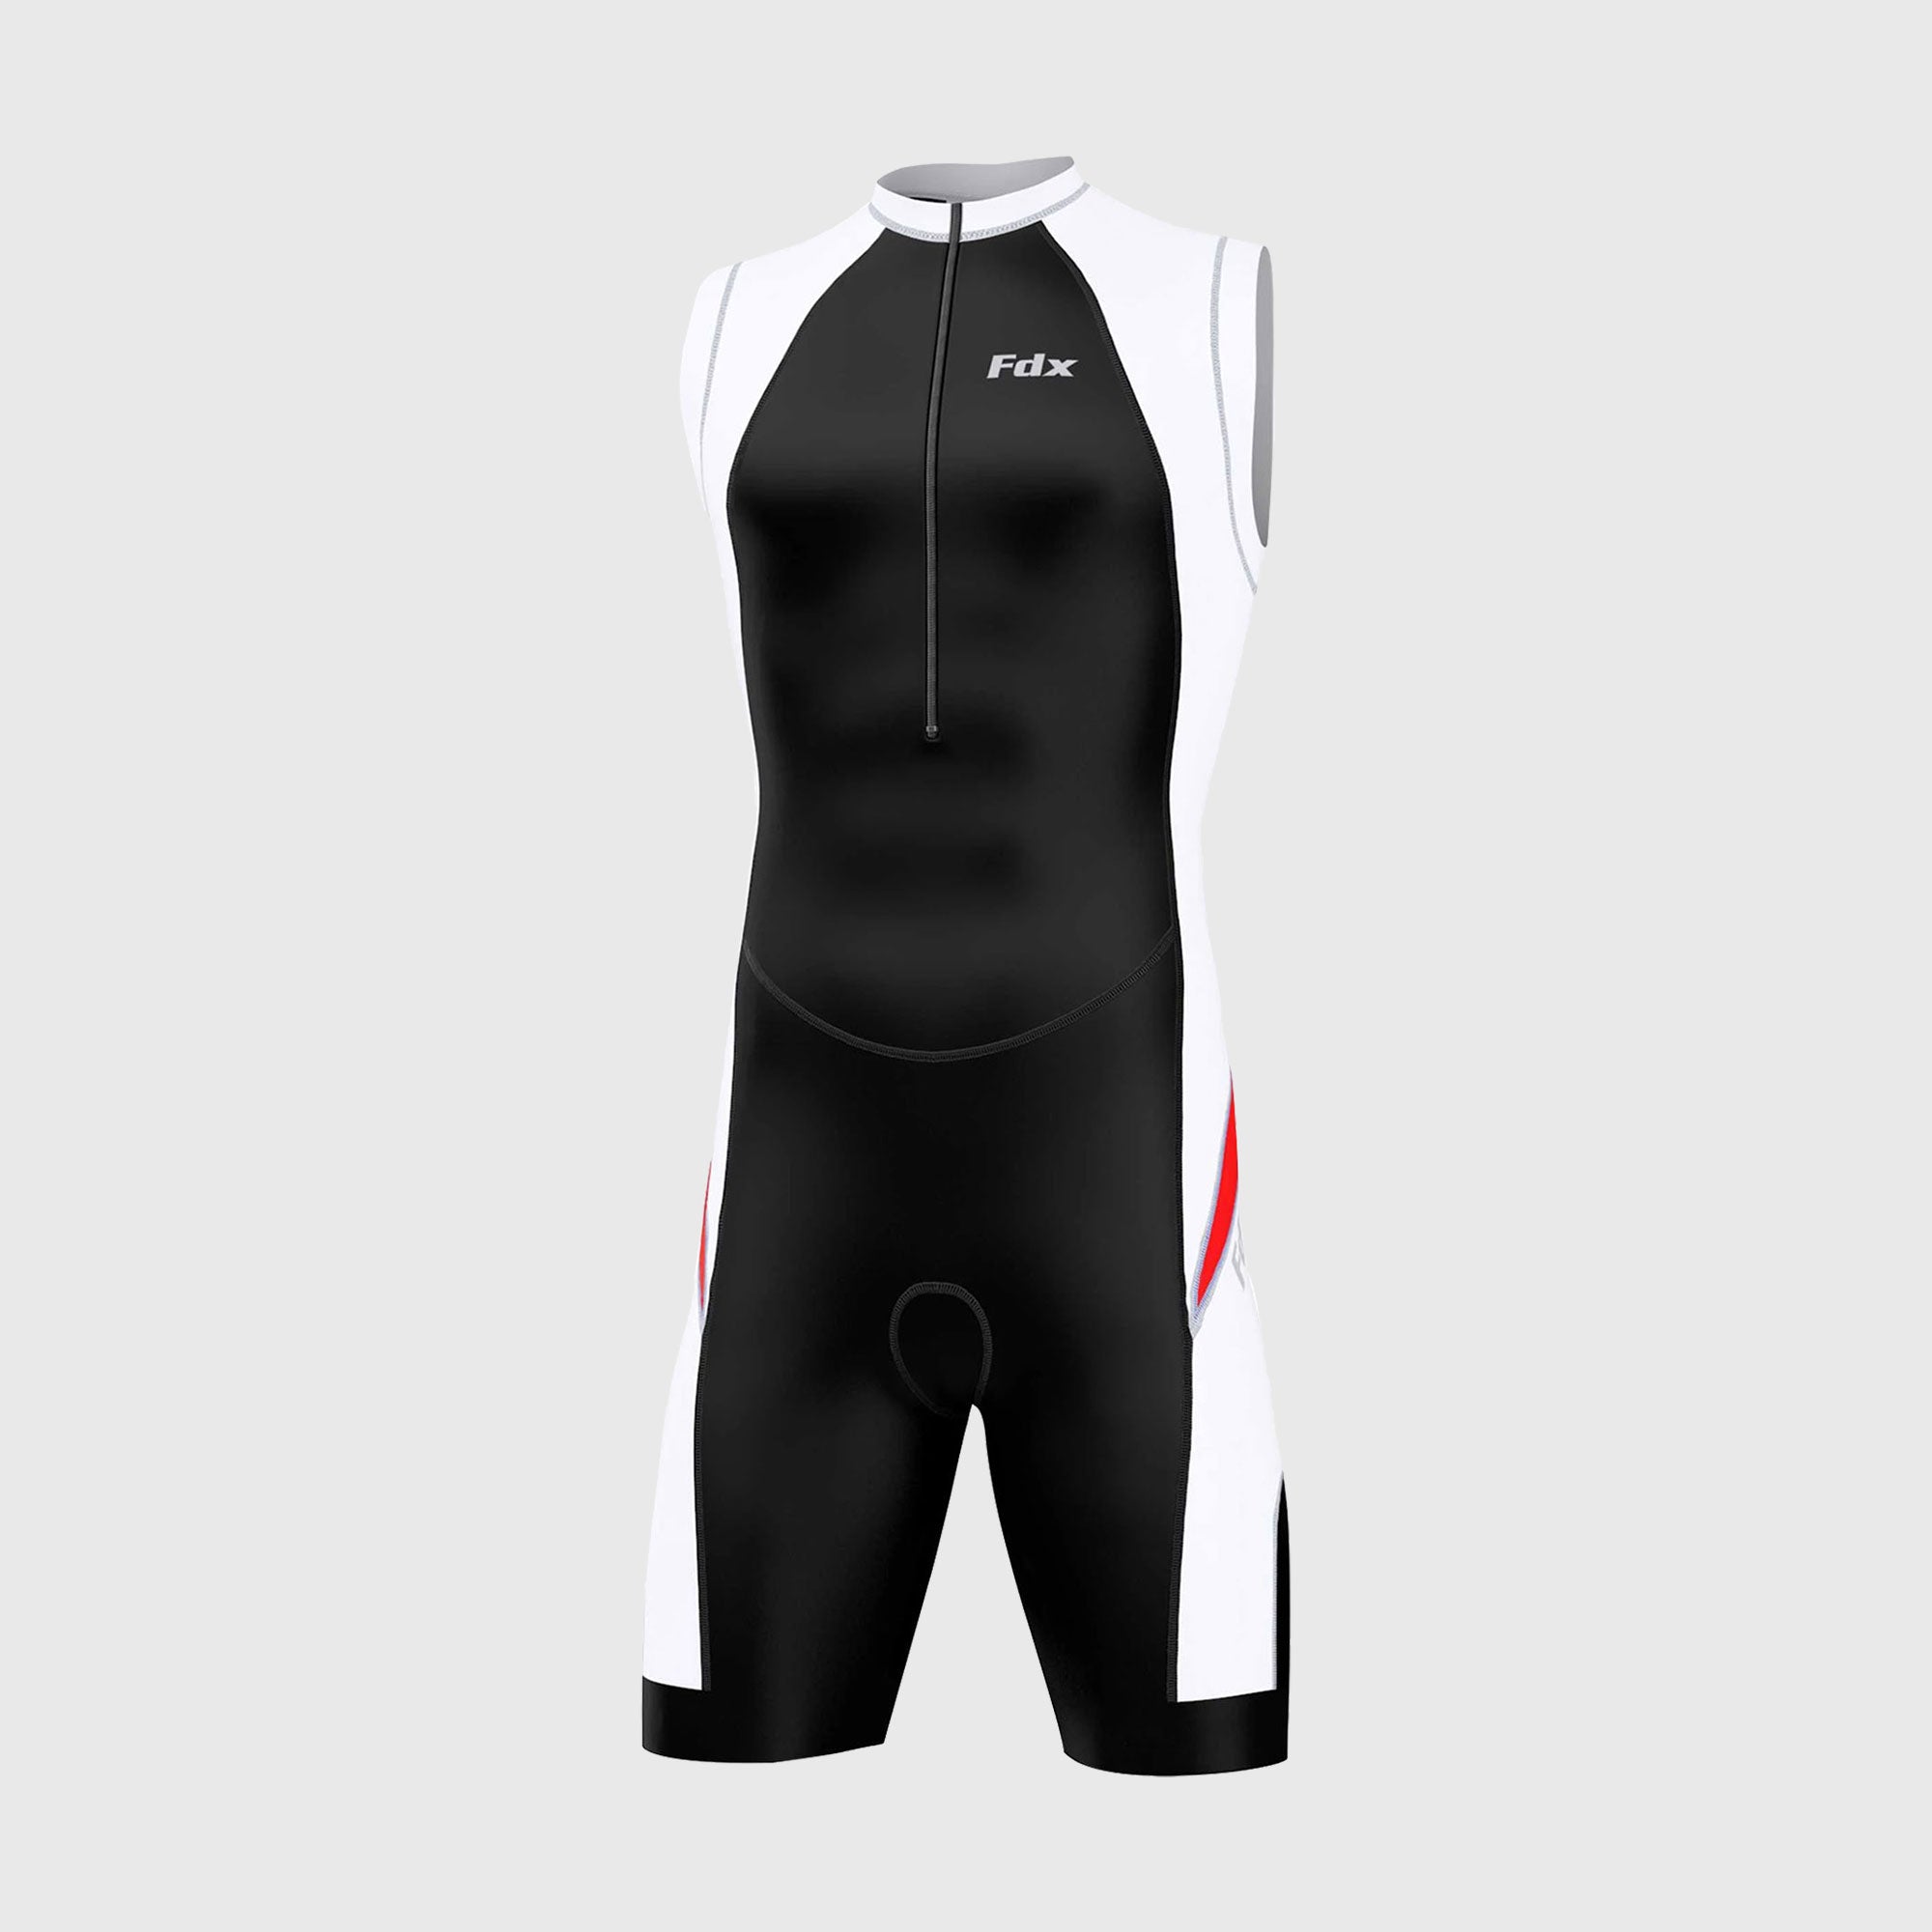 Fdx Zion Red Men's Sleeveless Padded Triathlon Suit